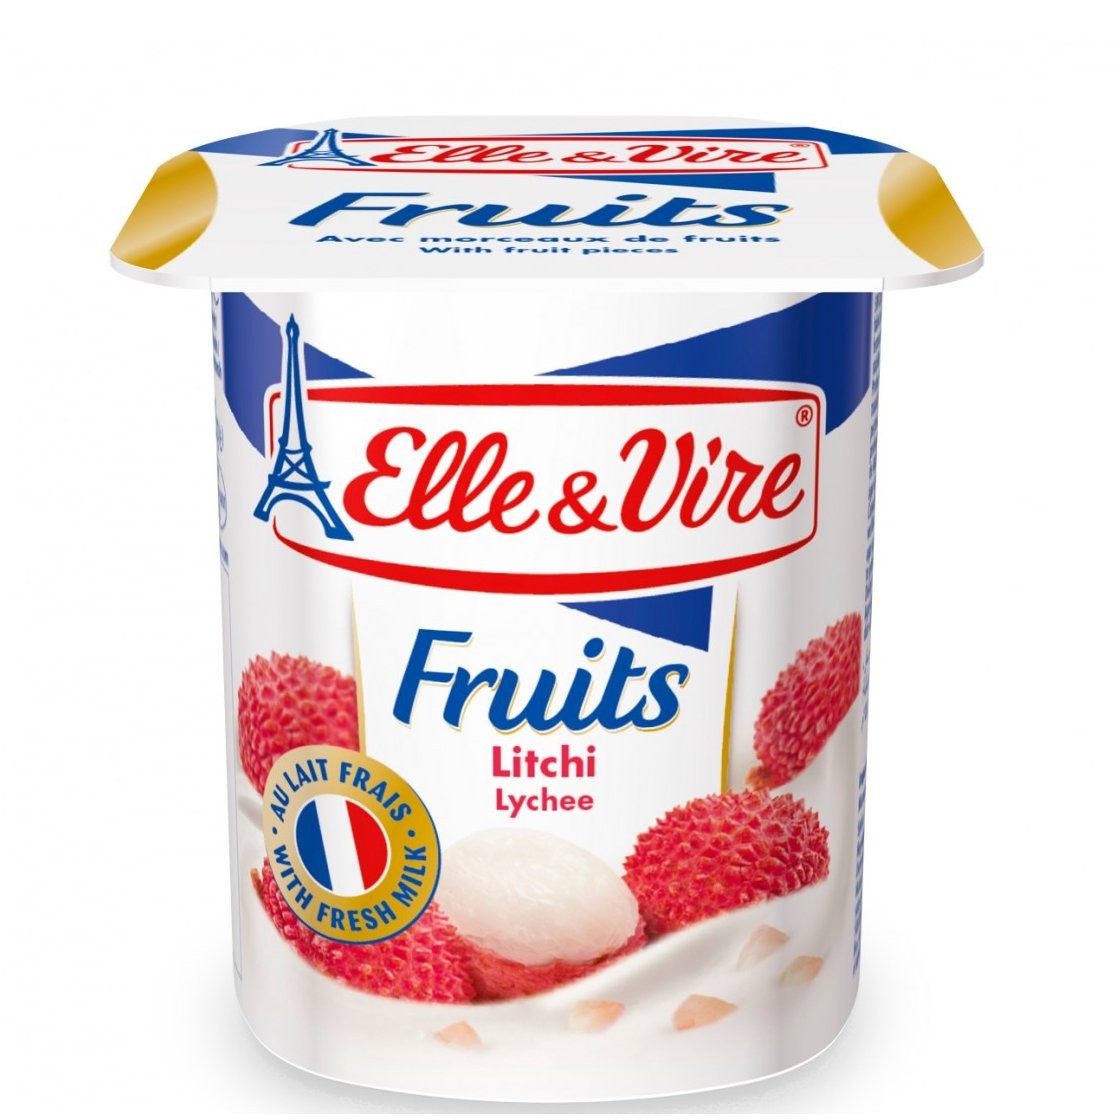 ELLE & VIRE FRUITS LYCHEE 125g